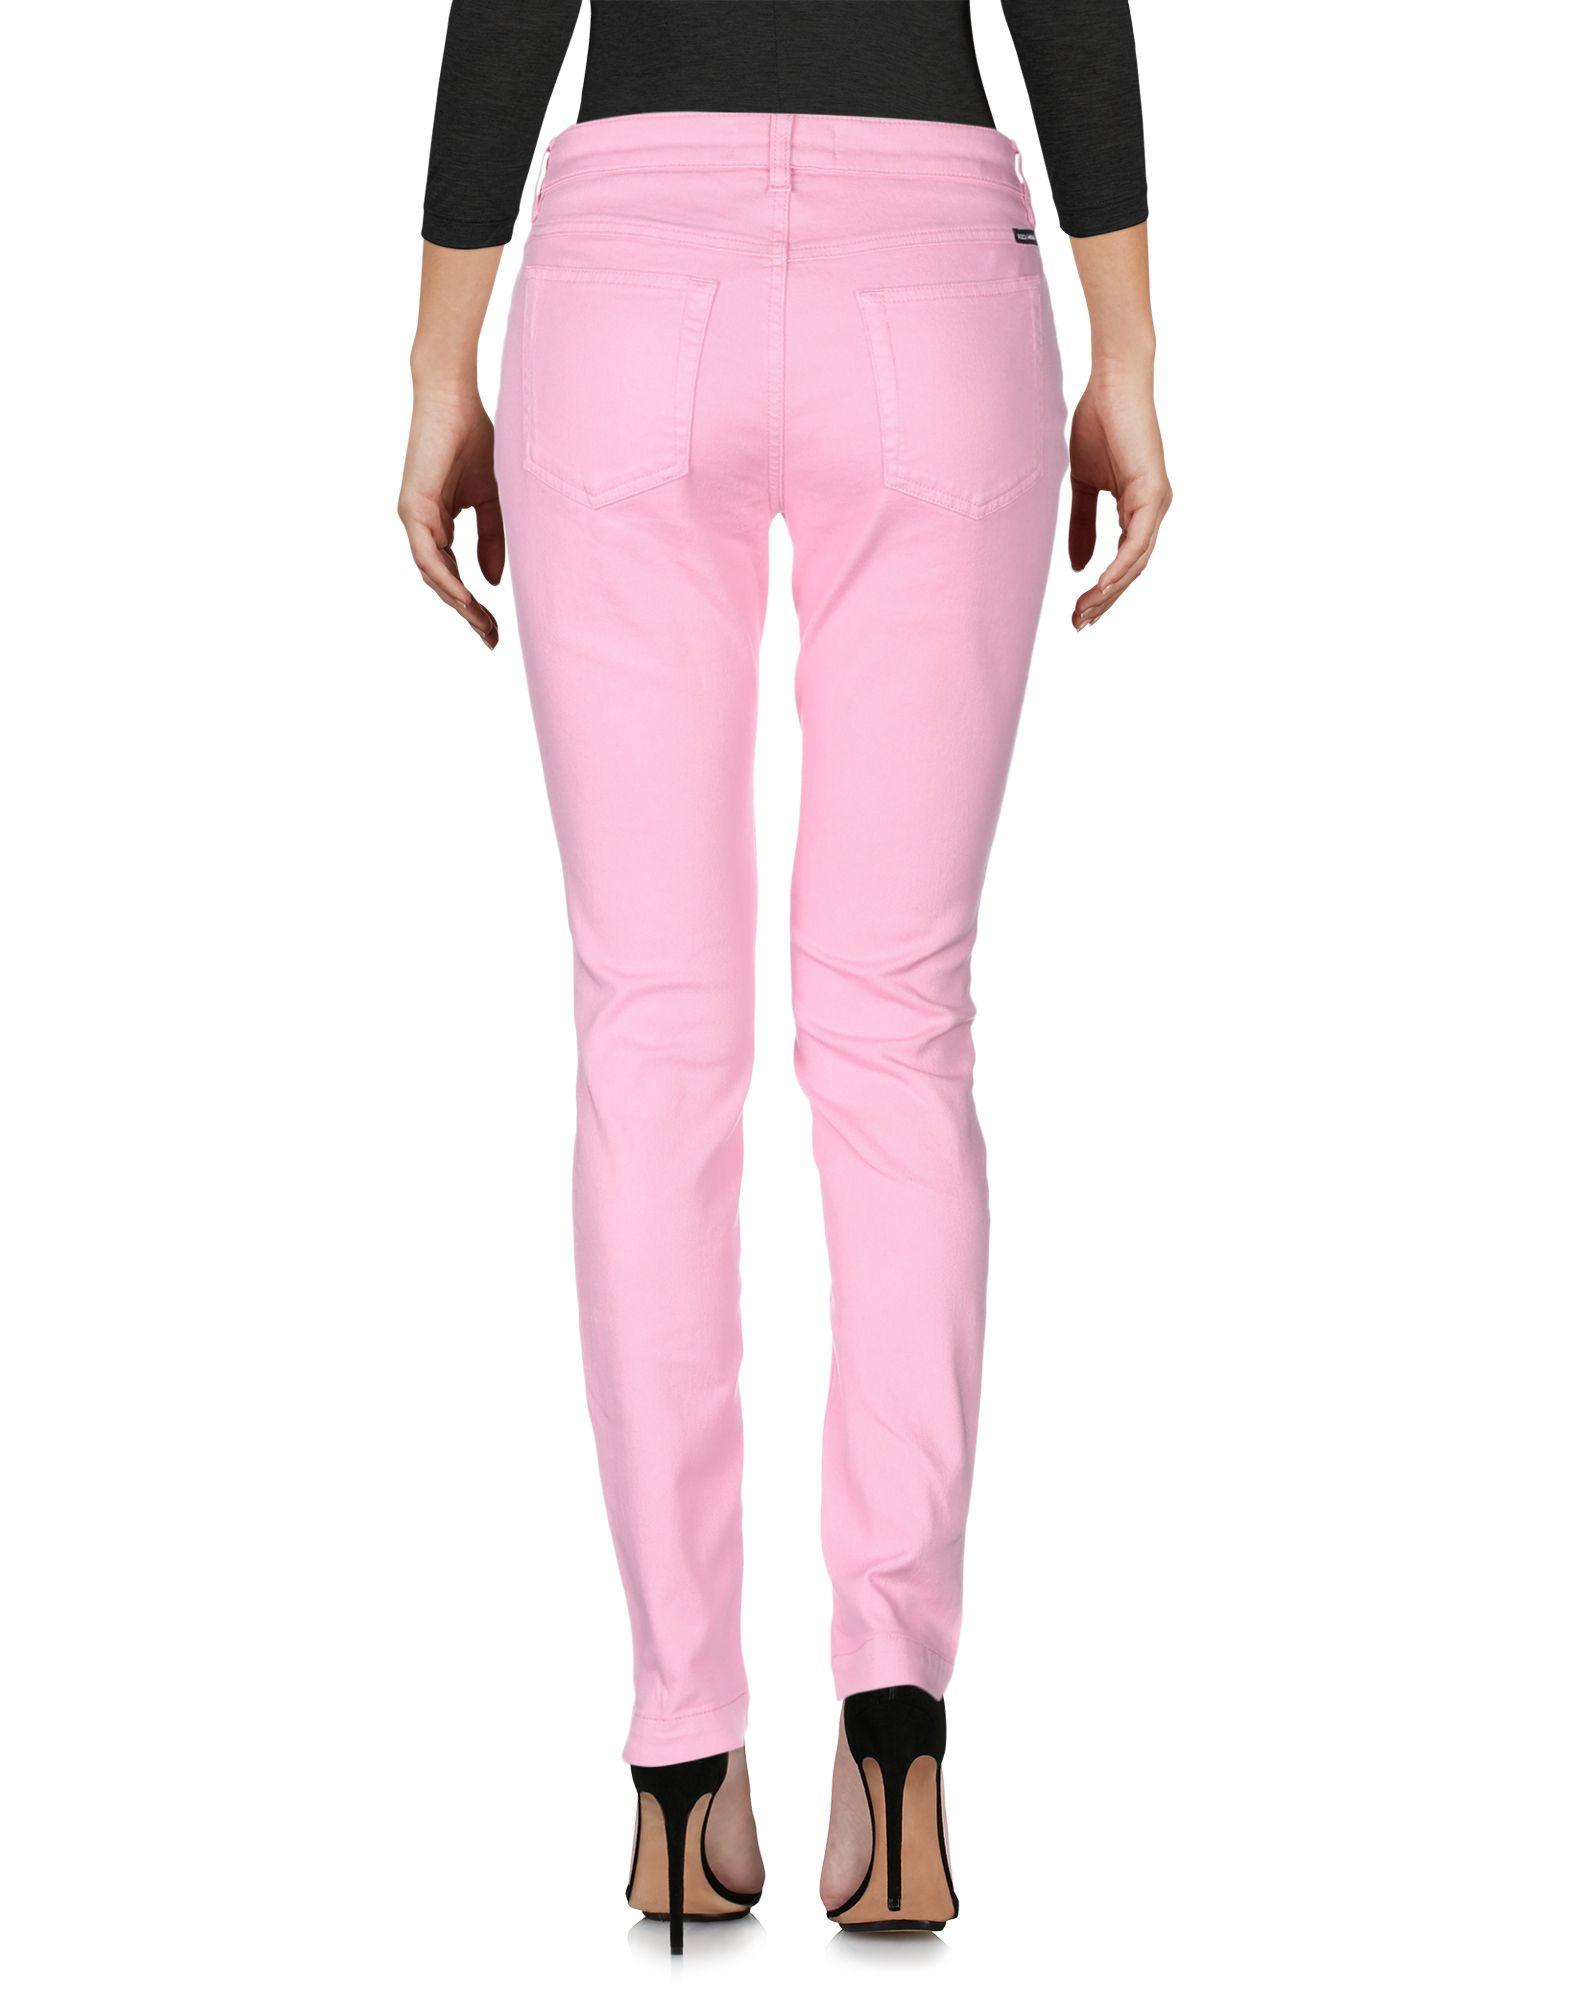 Dolce & Gabbana Denim Pants in Pink - Lyst